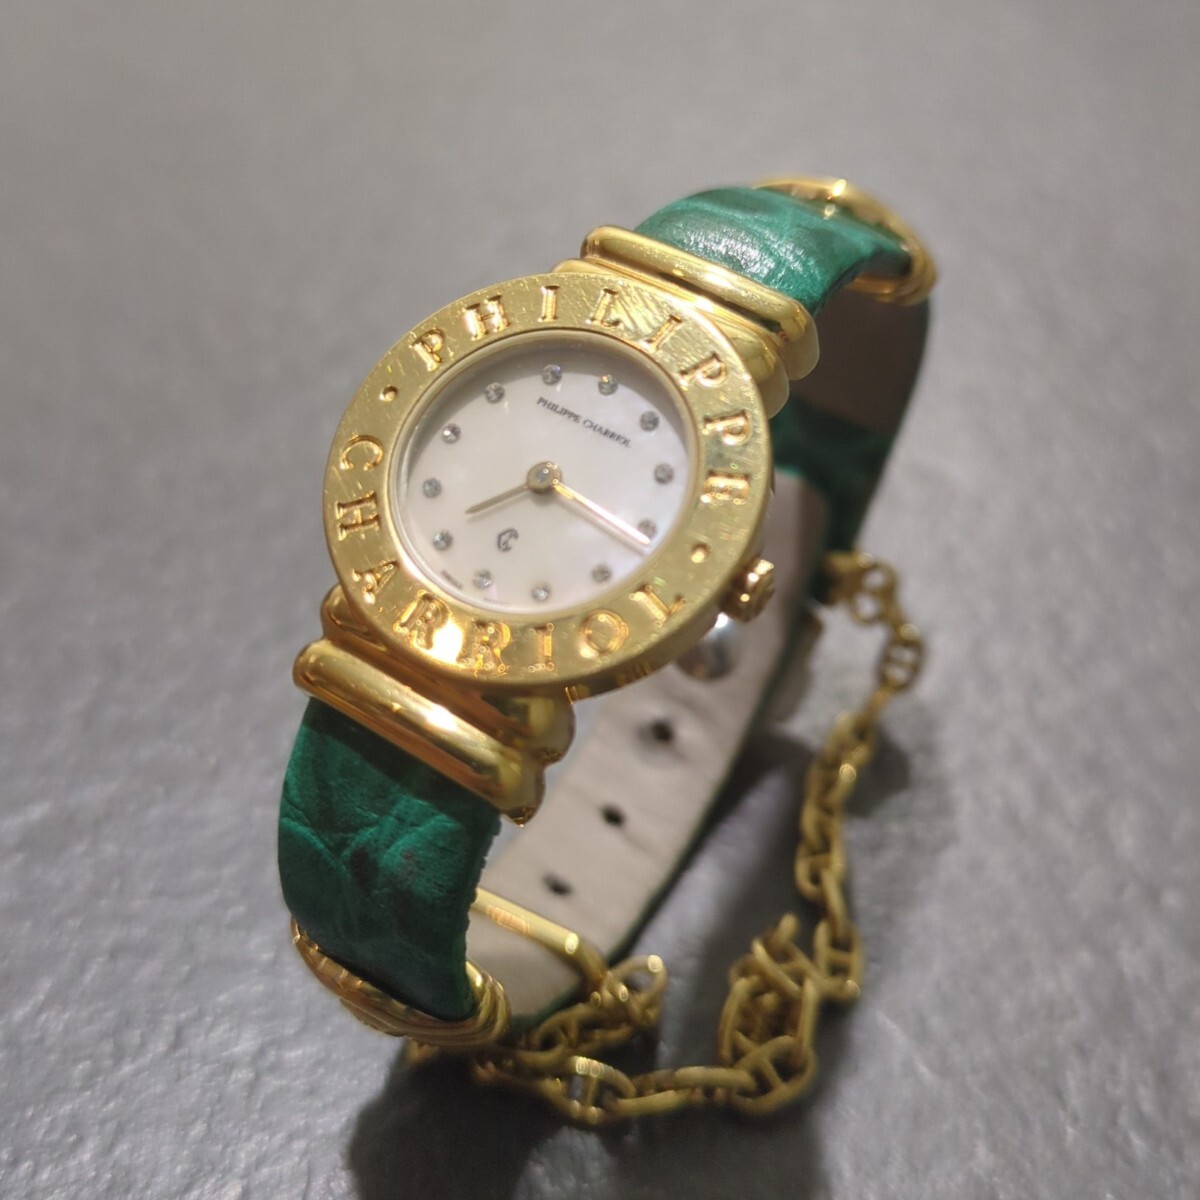  прекрасный товар работа товар PHILIPPE CHARRIOL Philip Charriol солнечный Toro pe наручные часы Gold зеленый женский кварц ракушка циферблат 